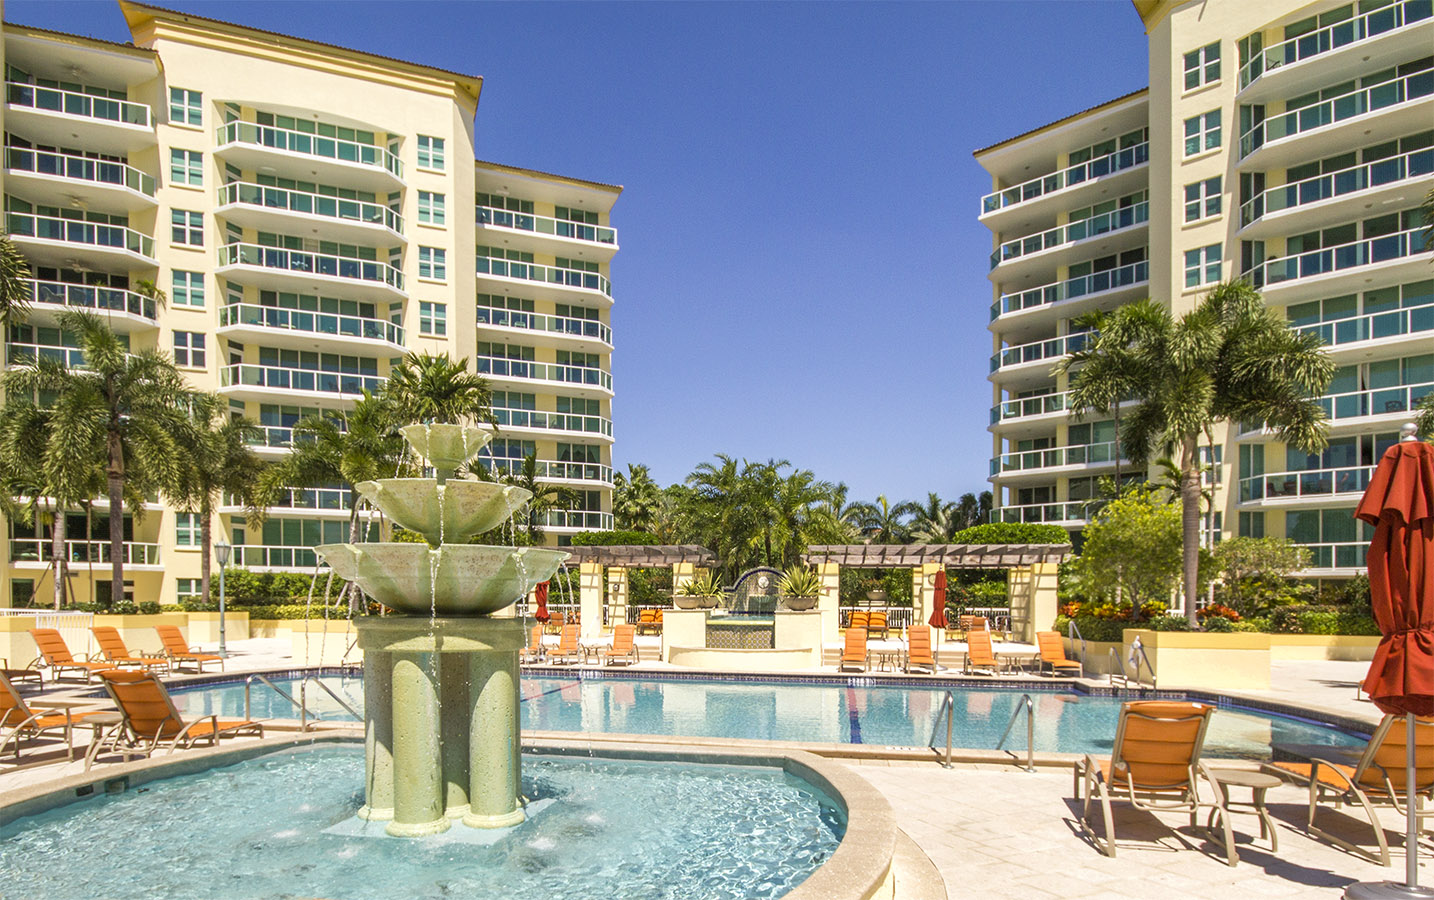 Townsend Place Boca Raton luxury condominiums